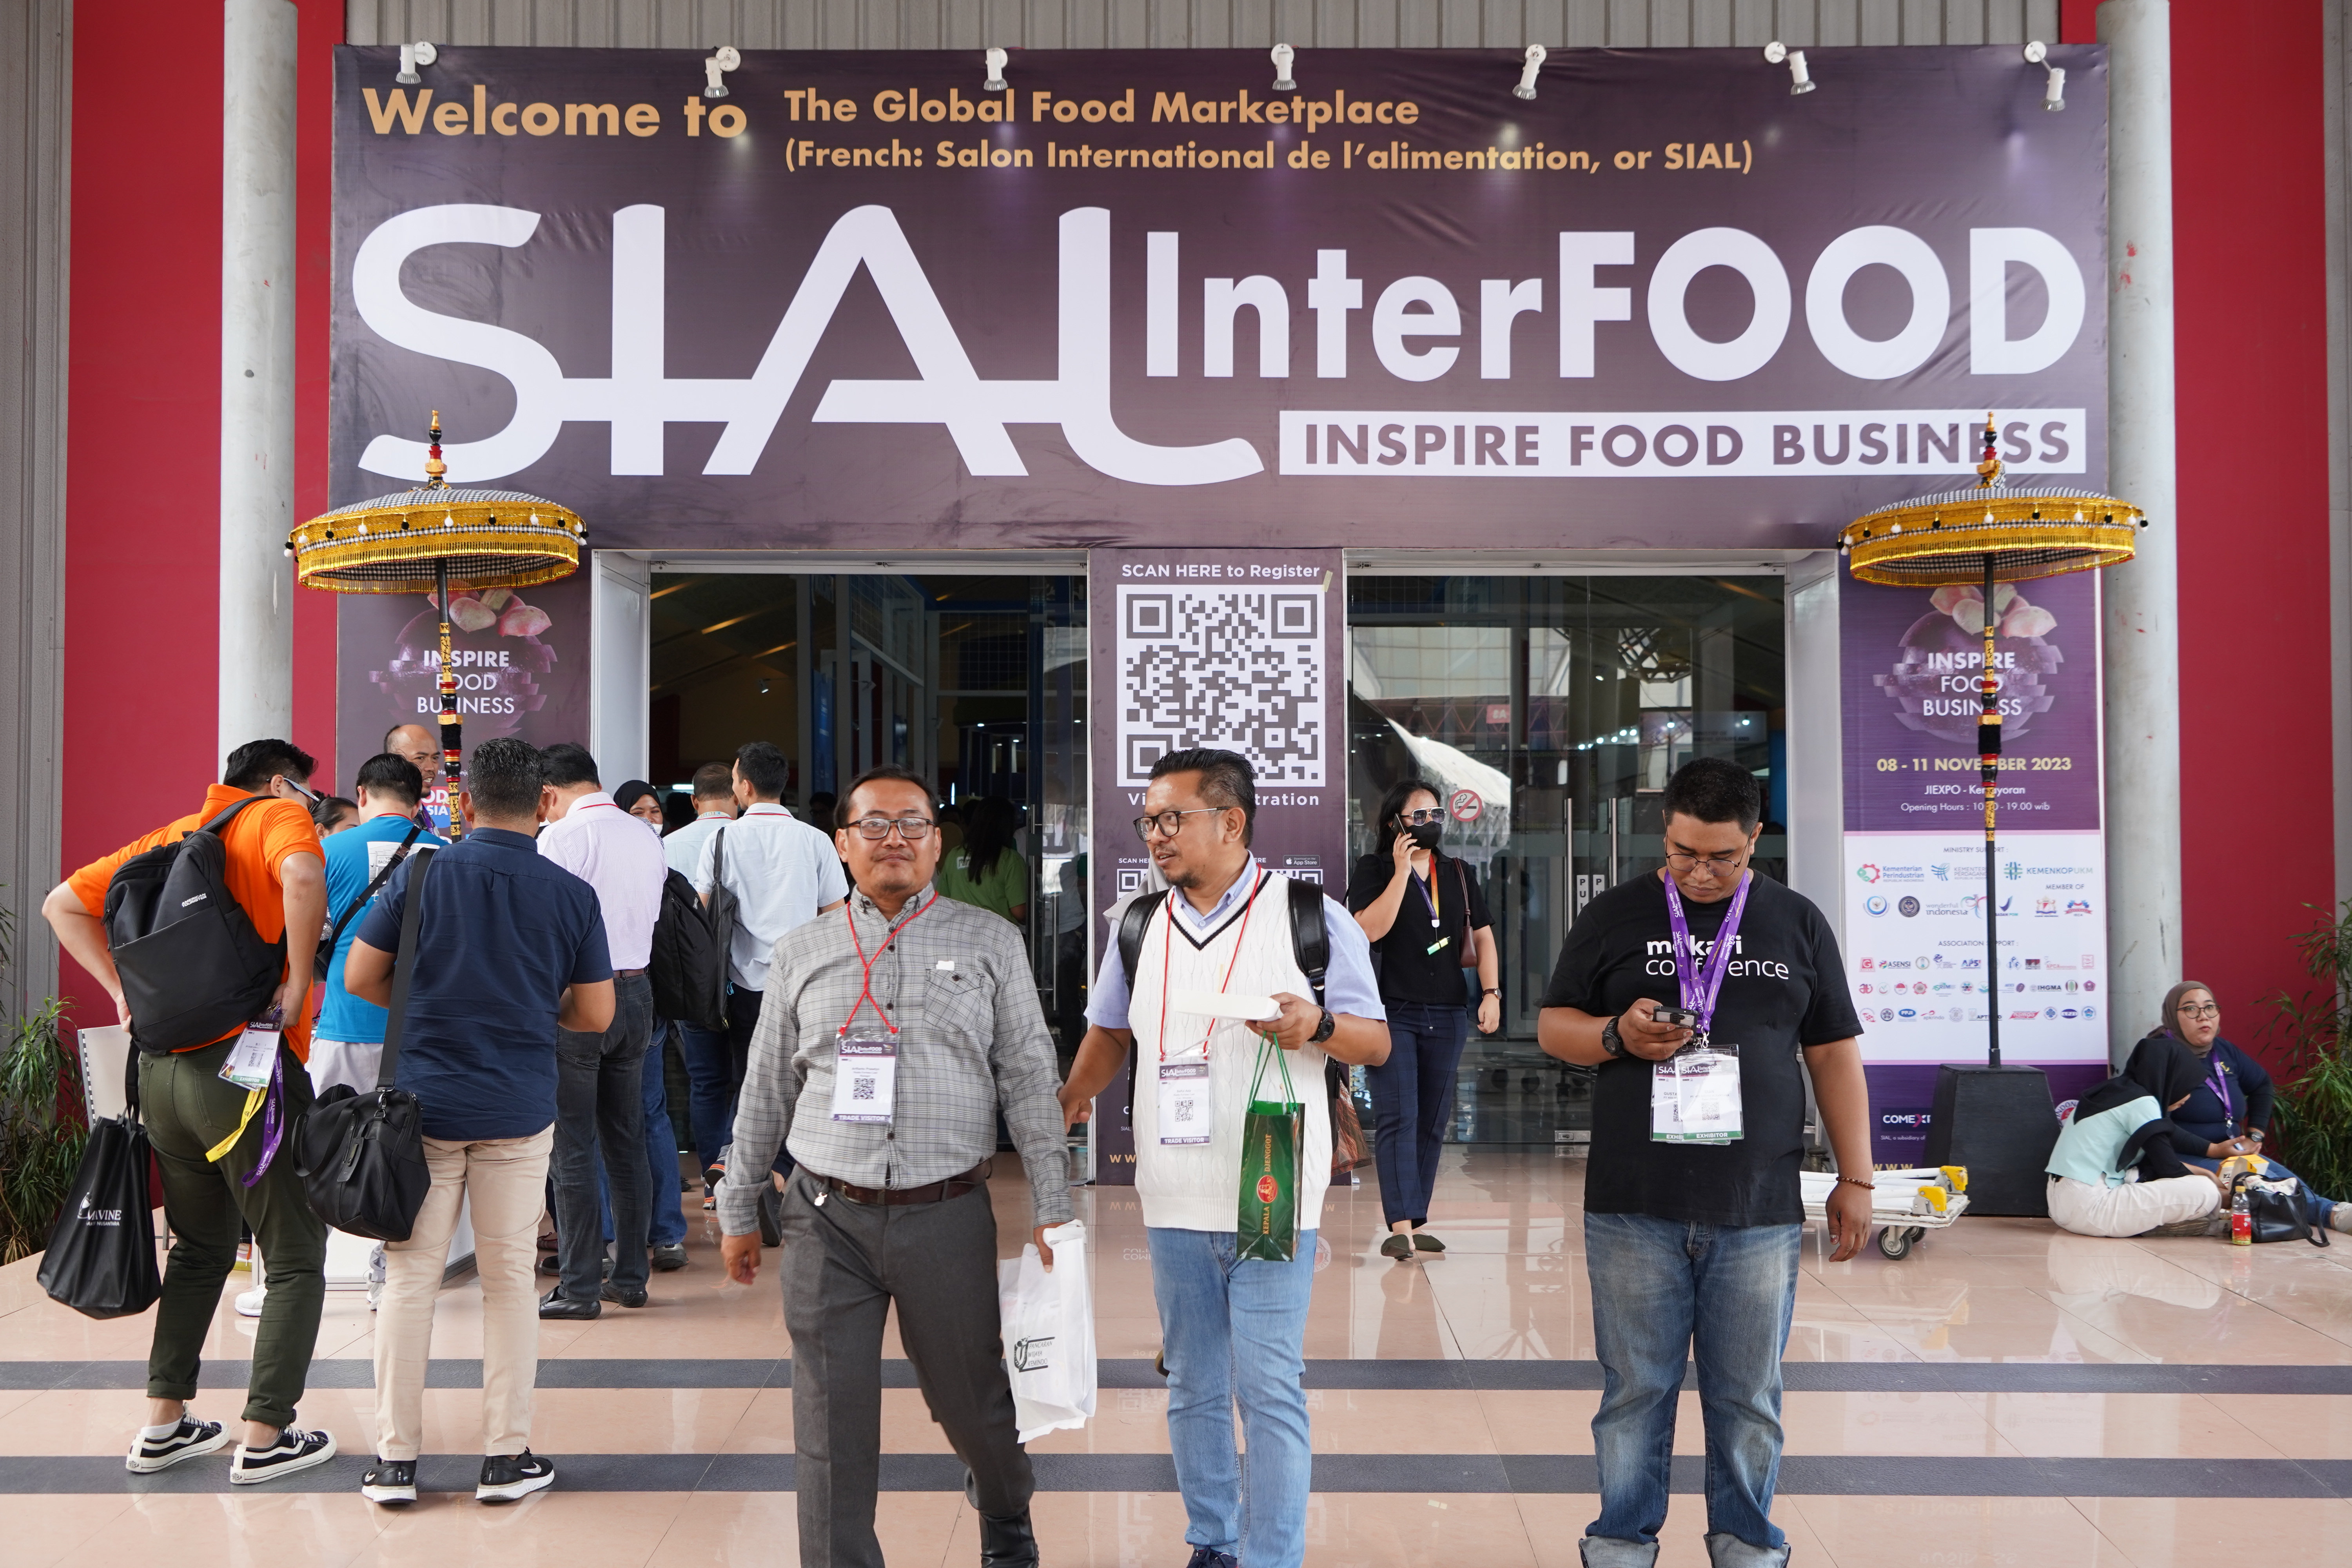 Salon International de L’alimentation (SIAL Interfood)